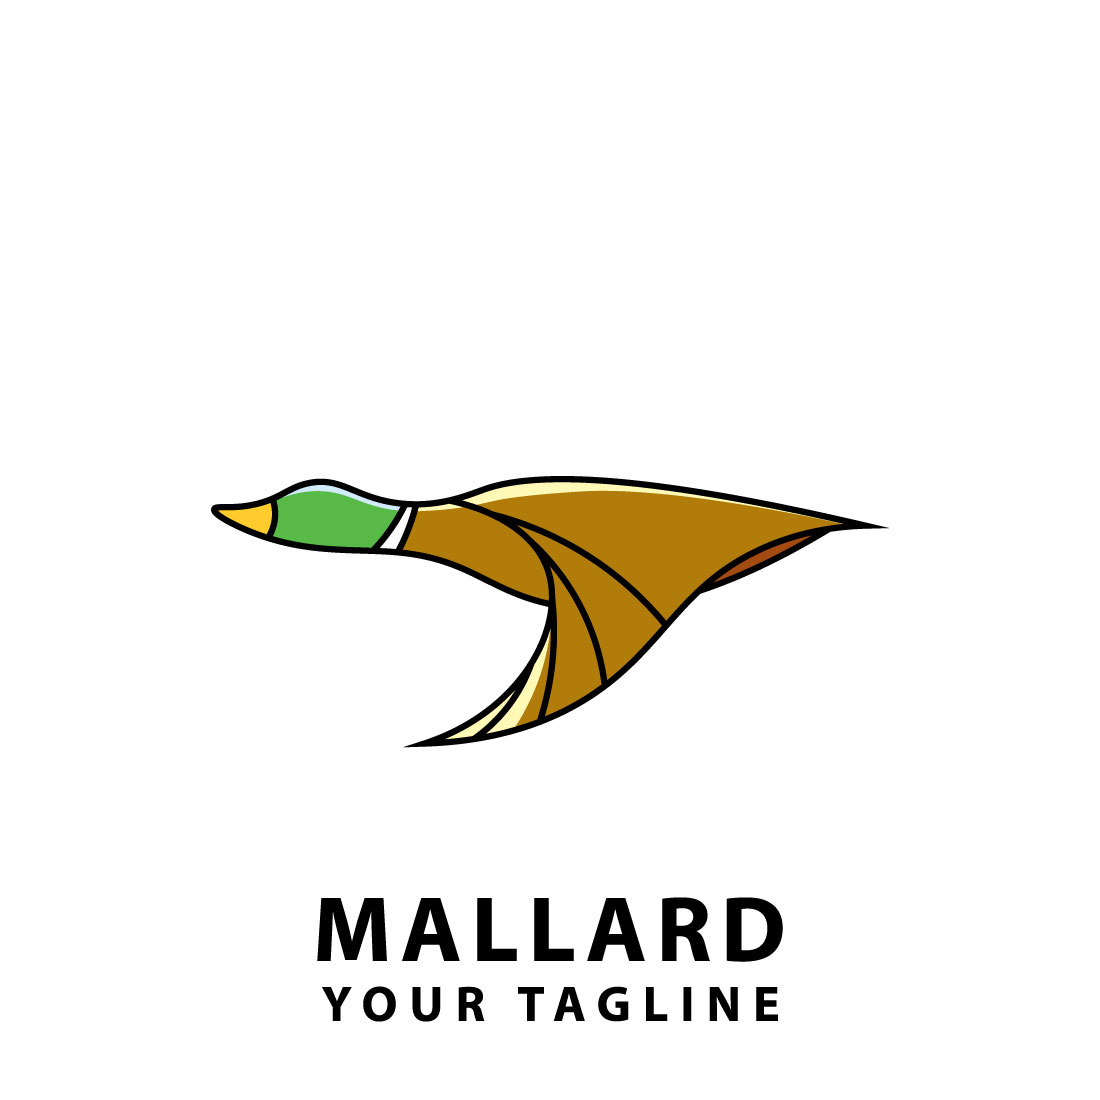 Mallard Logo cover image.